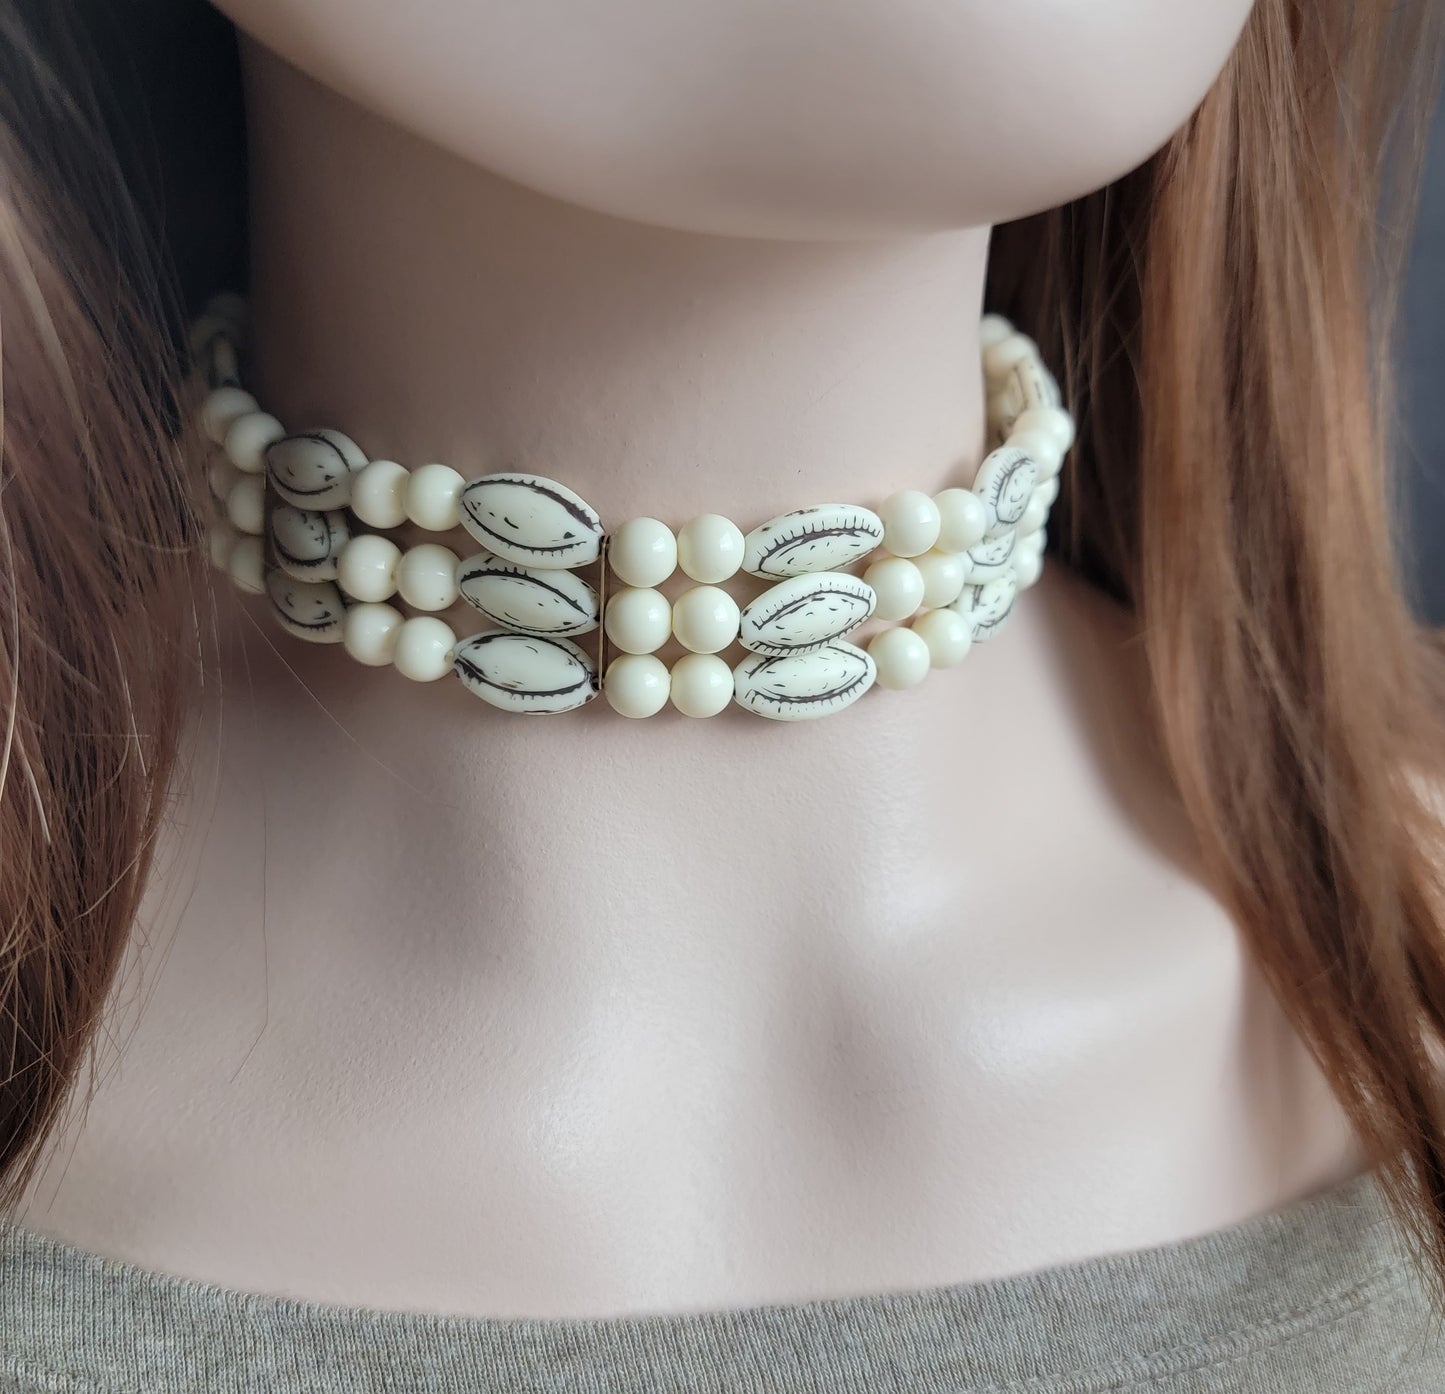 Multi Strand Tribal Off White Bead Dog Collar Choker Necklace Adjustable 16 1/2"